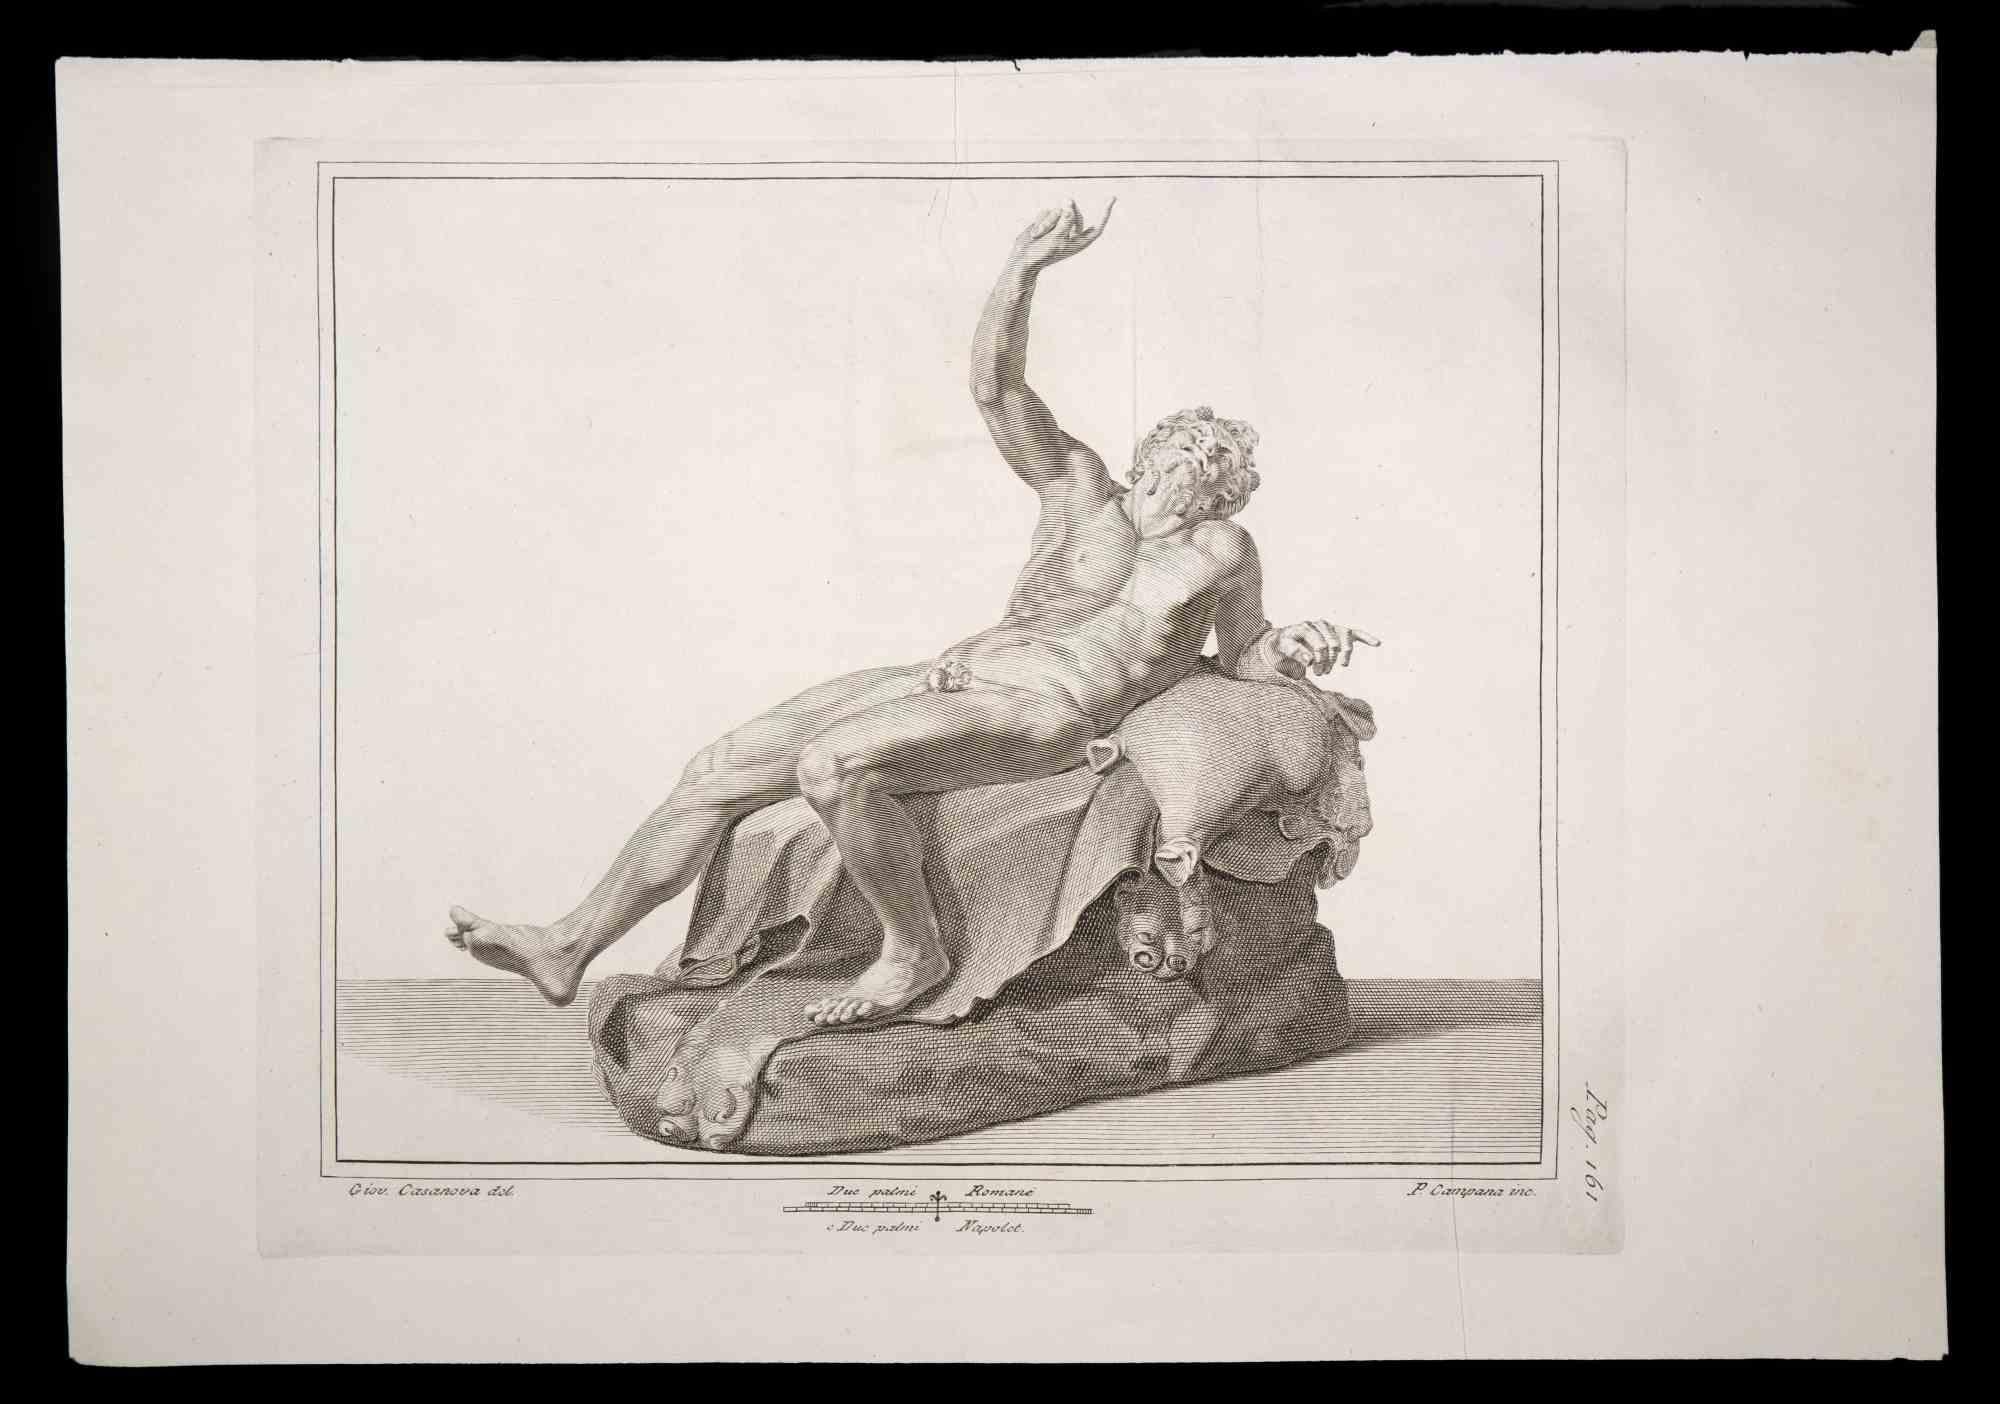 Pietro Campana Figurative Print - Dionysus, Ancient Roman Statue -  Etching by P. Campana - 18th century